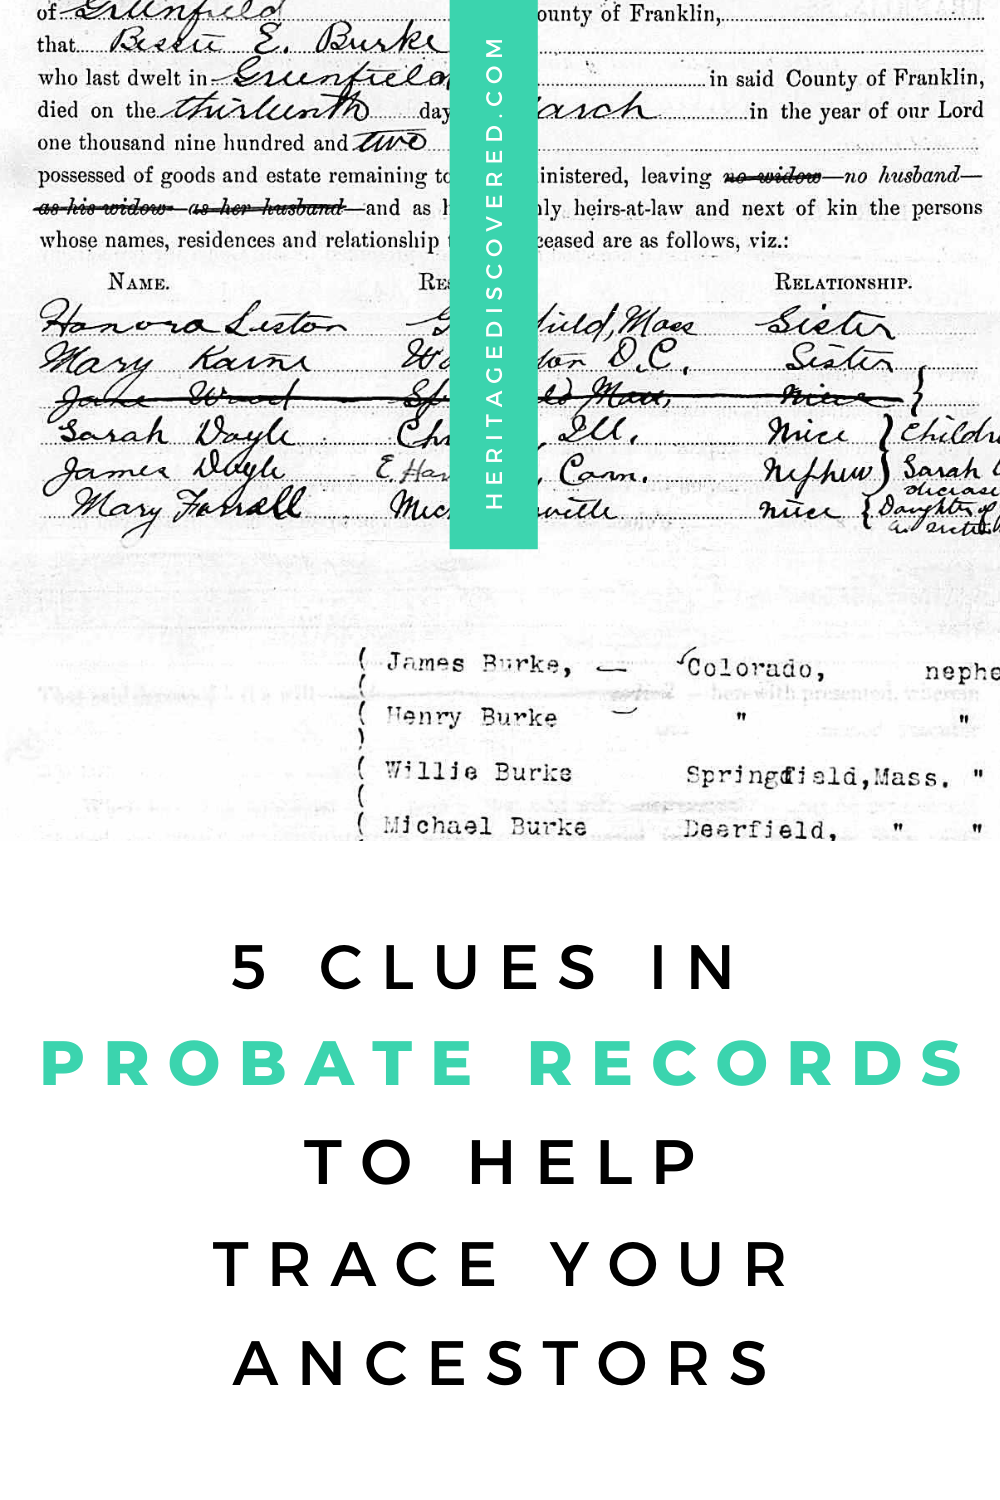 5_clues_probate_records_trace_ancestors.png